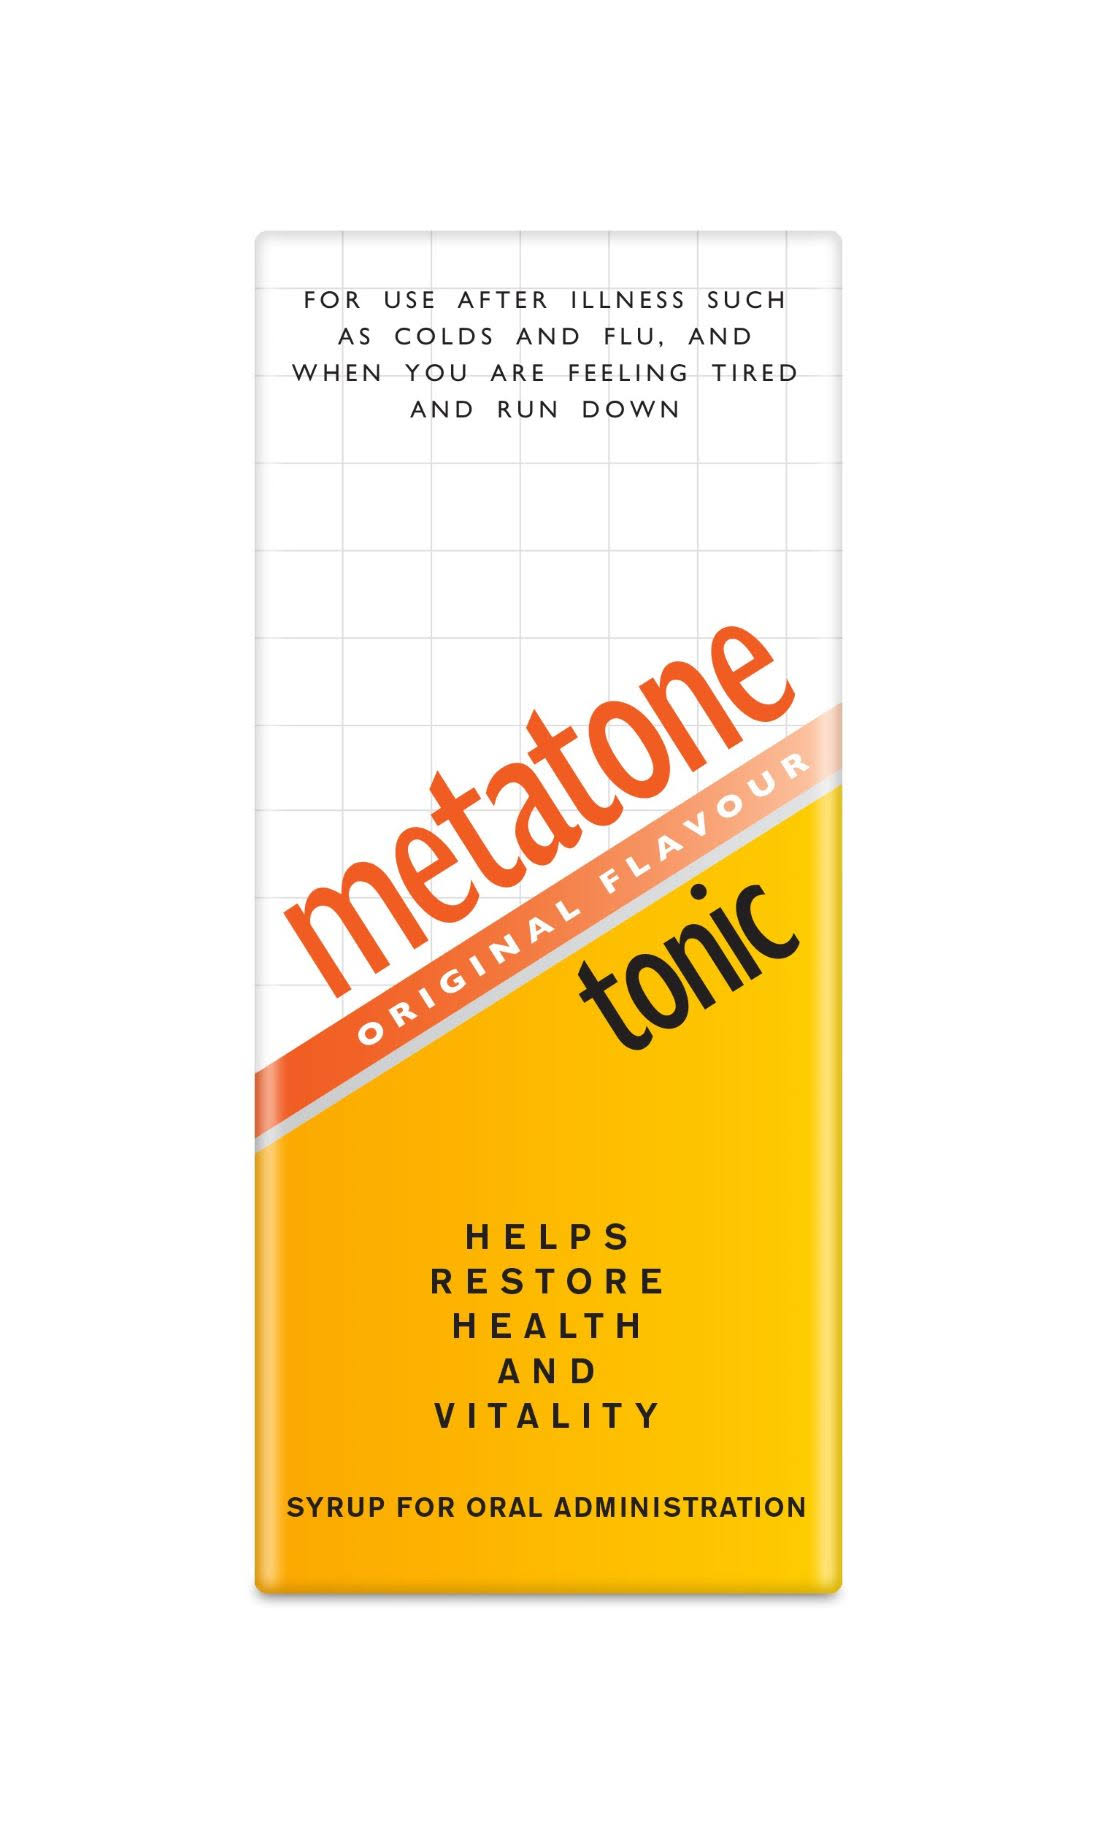 Metatone Tonic Original Flavour – 300ml